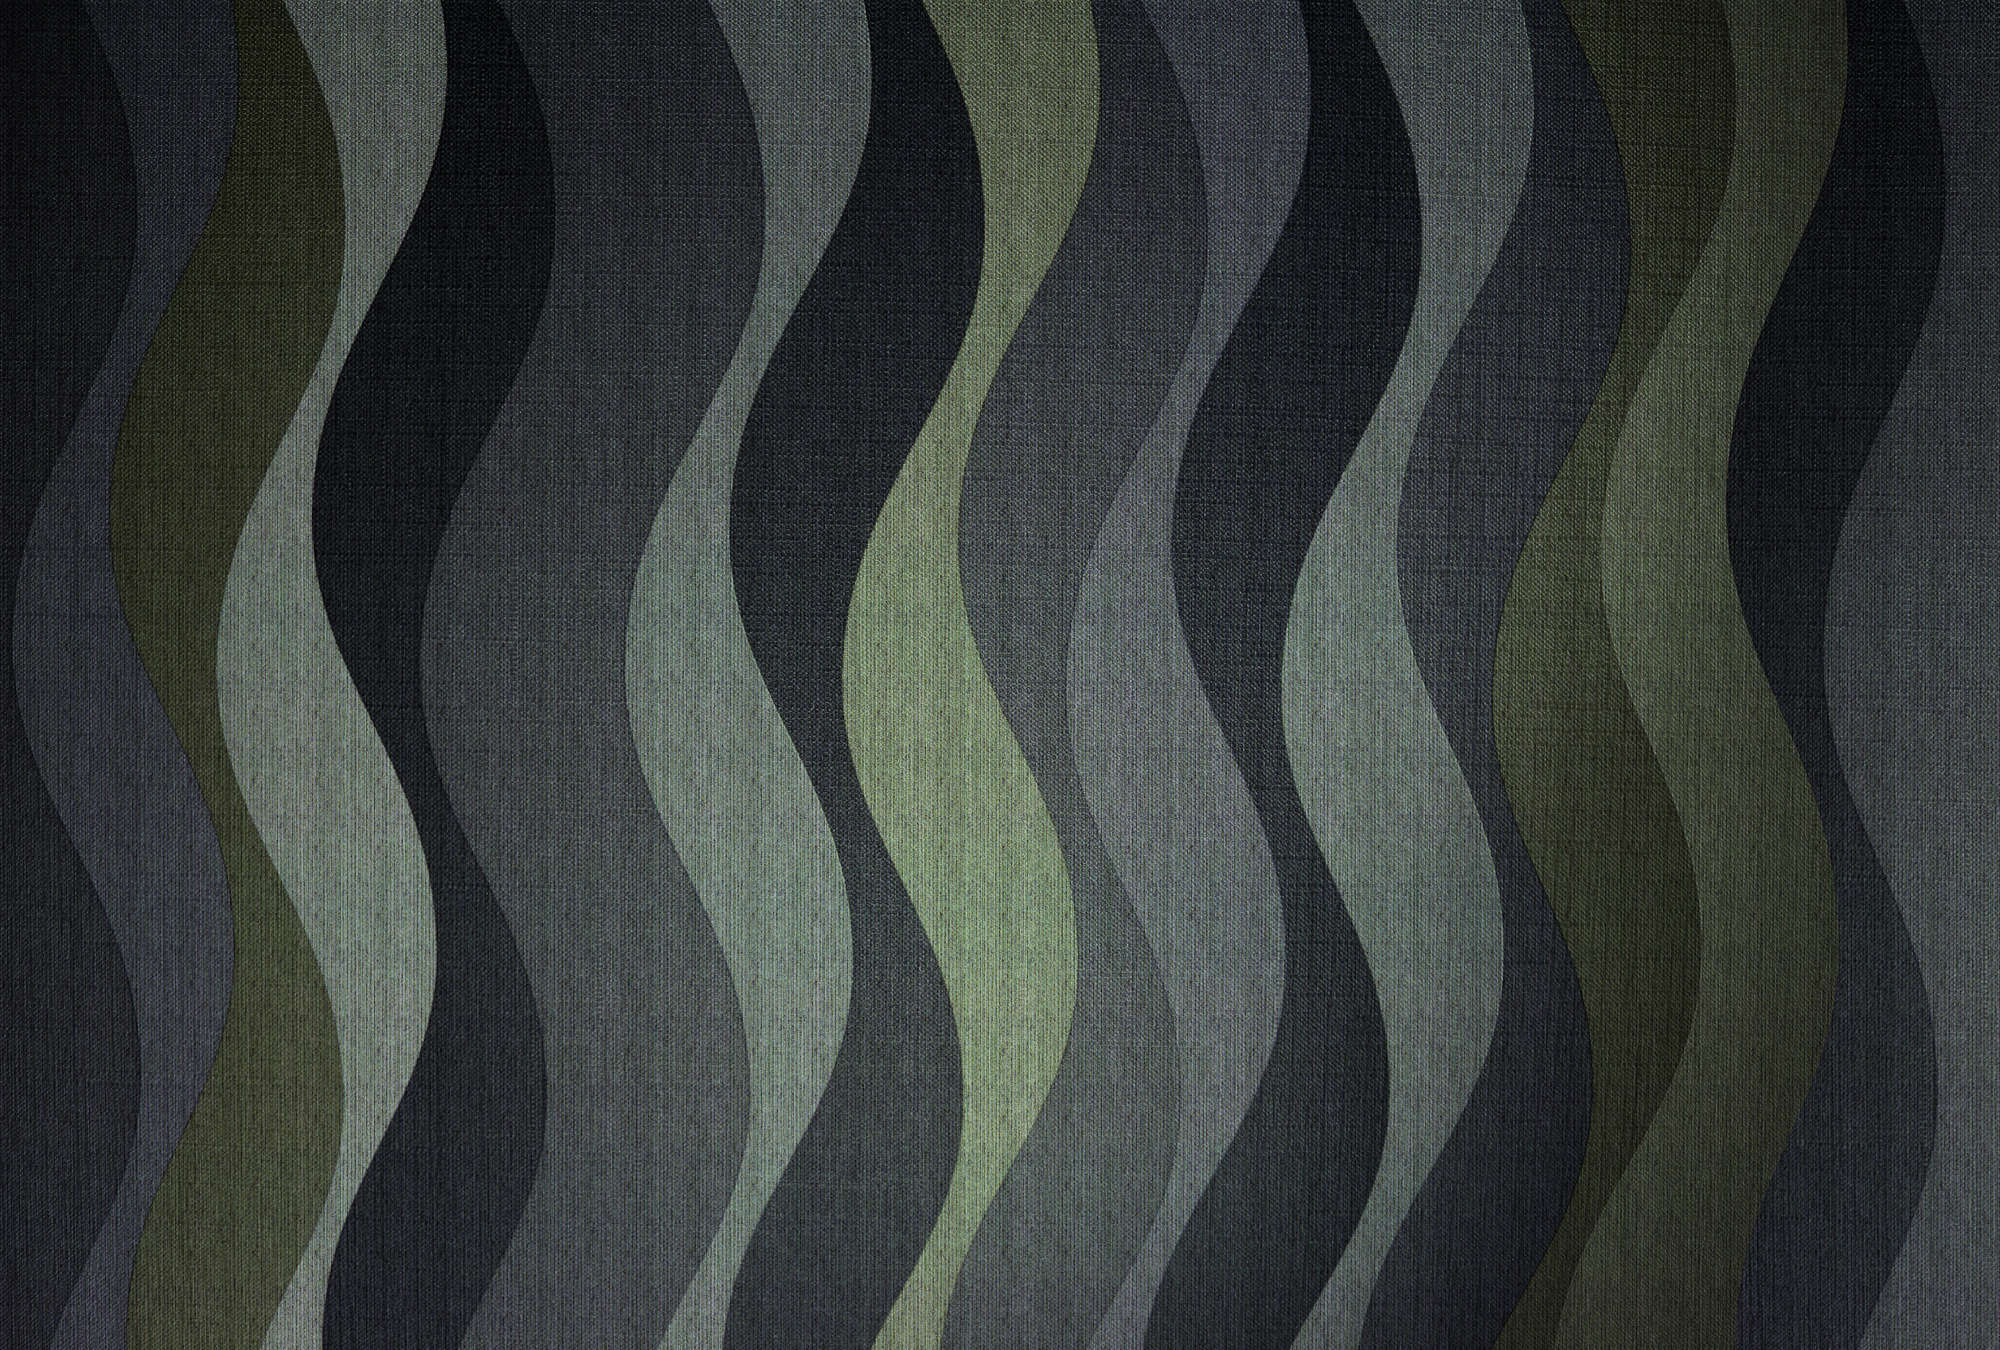             Savoy 2 - waves graphic photo wallpaper retro 50s design
        